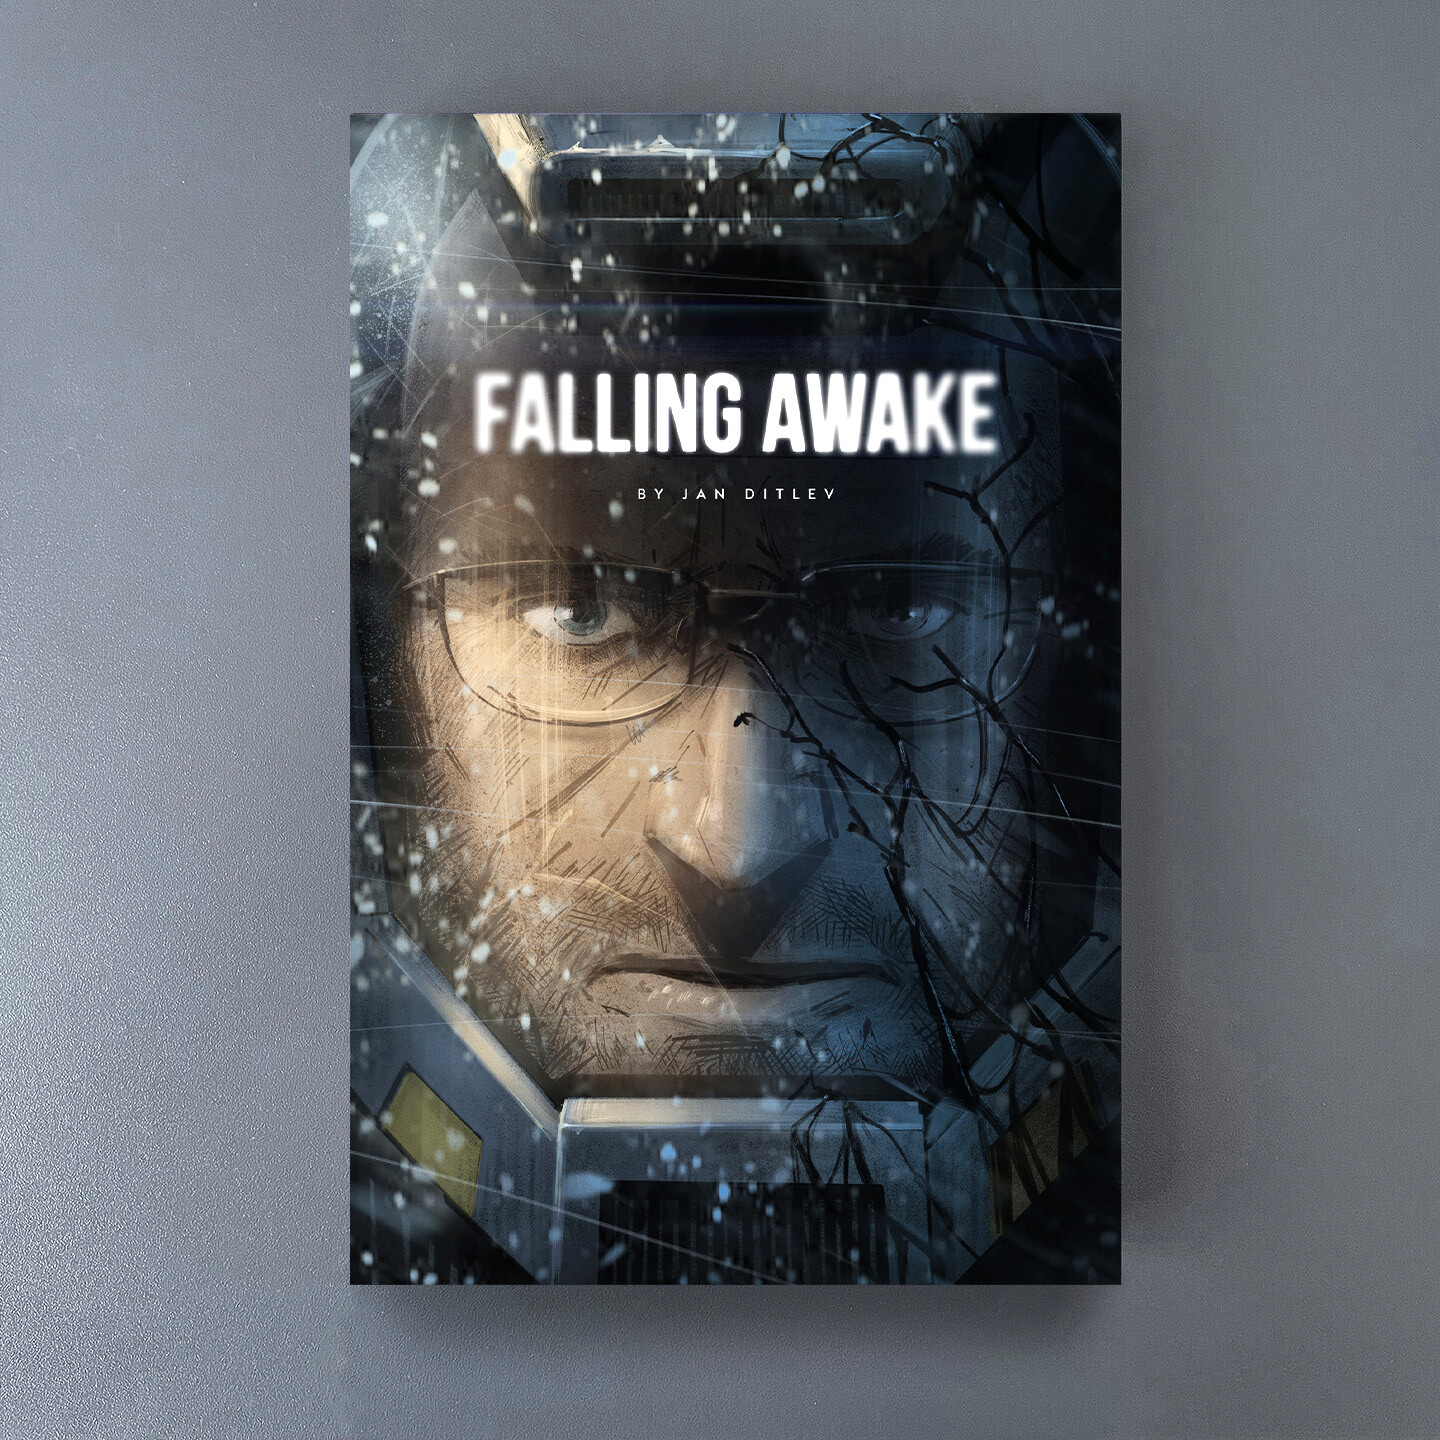 Falling Awake - A Graphic novel